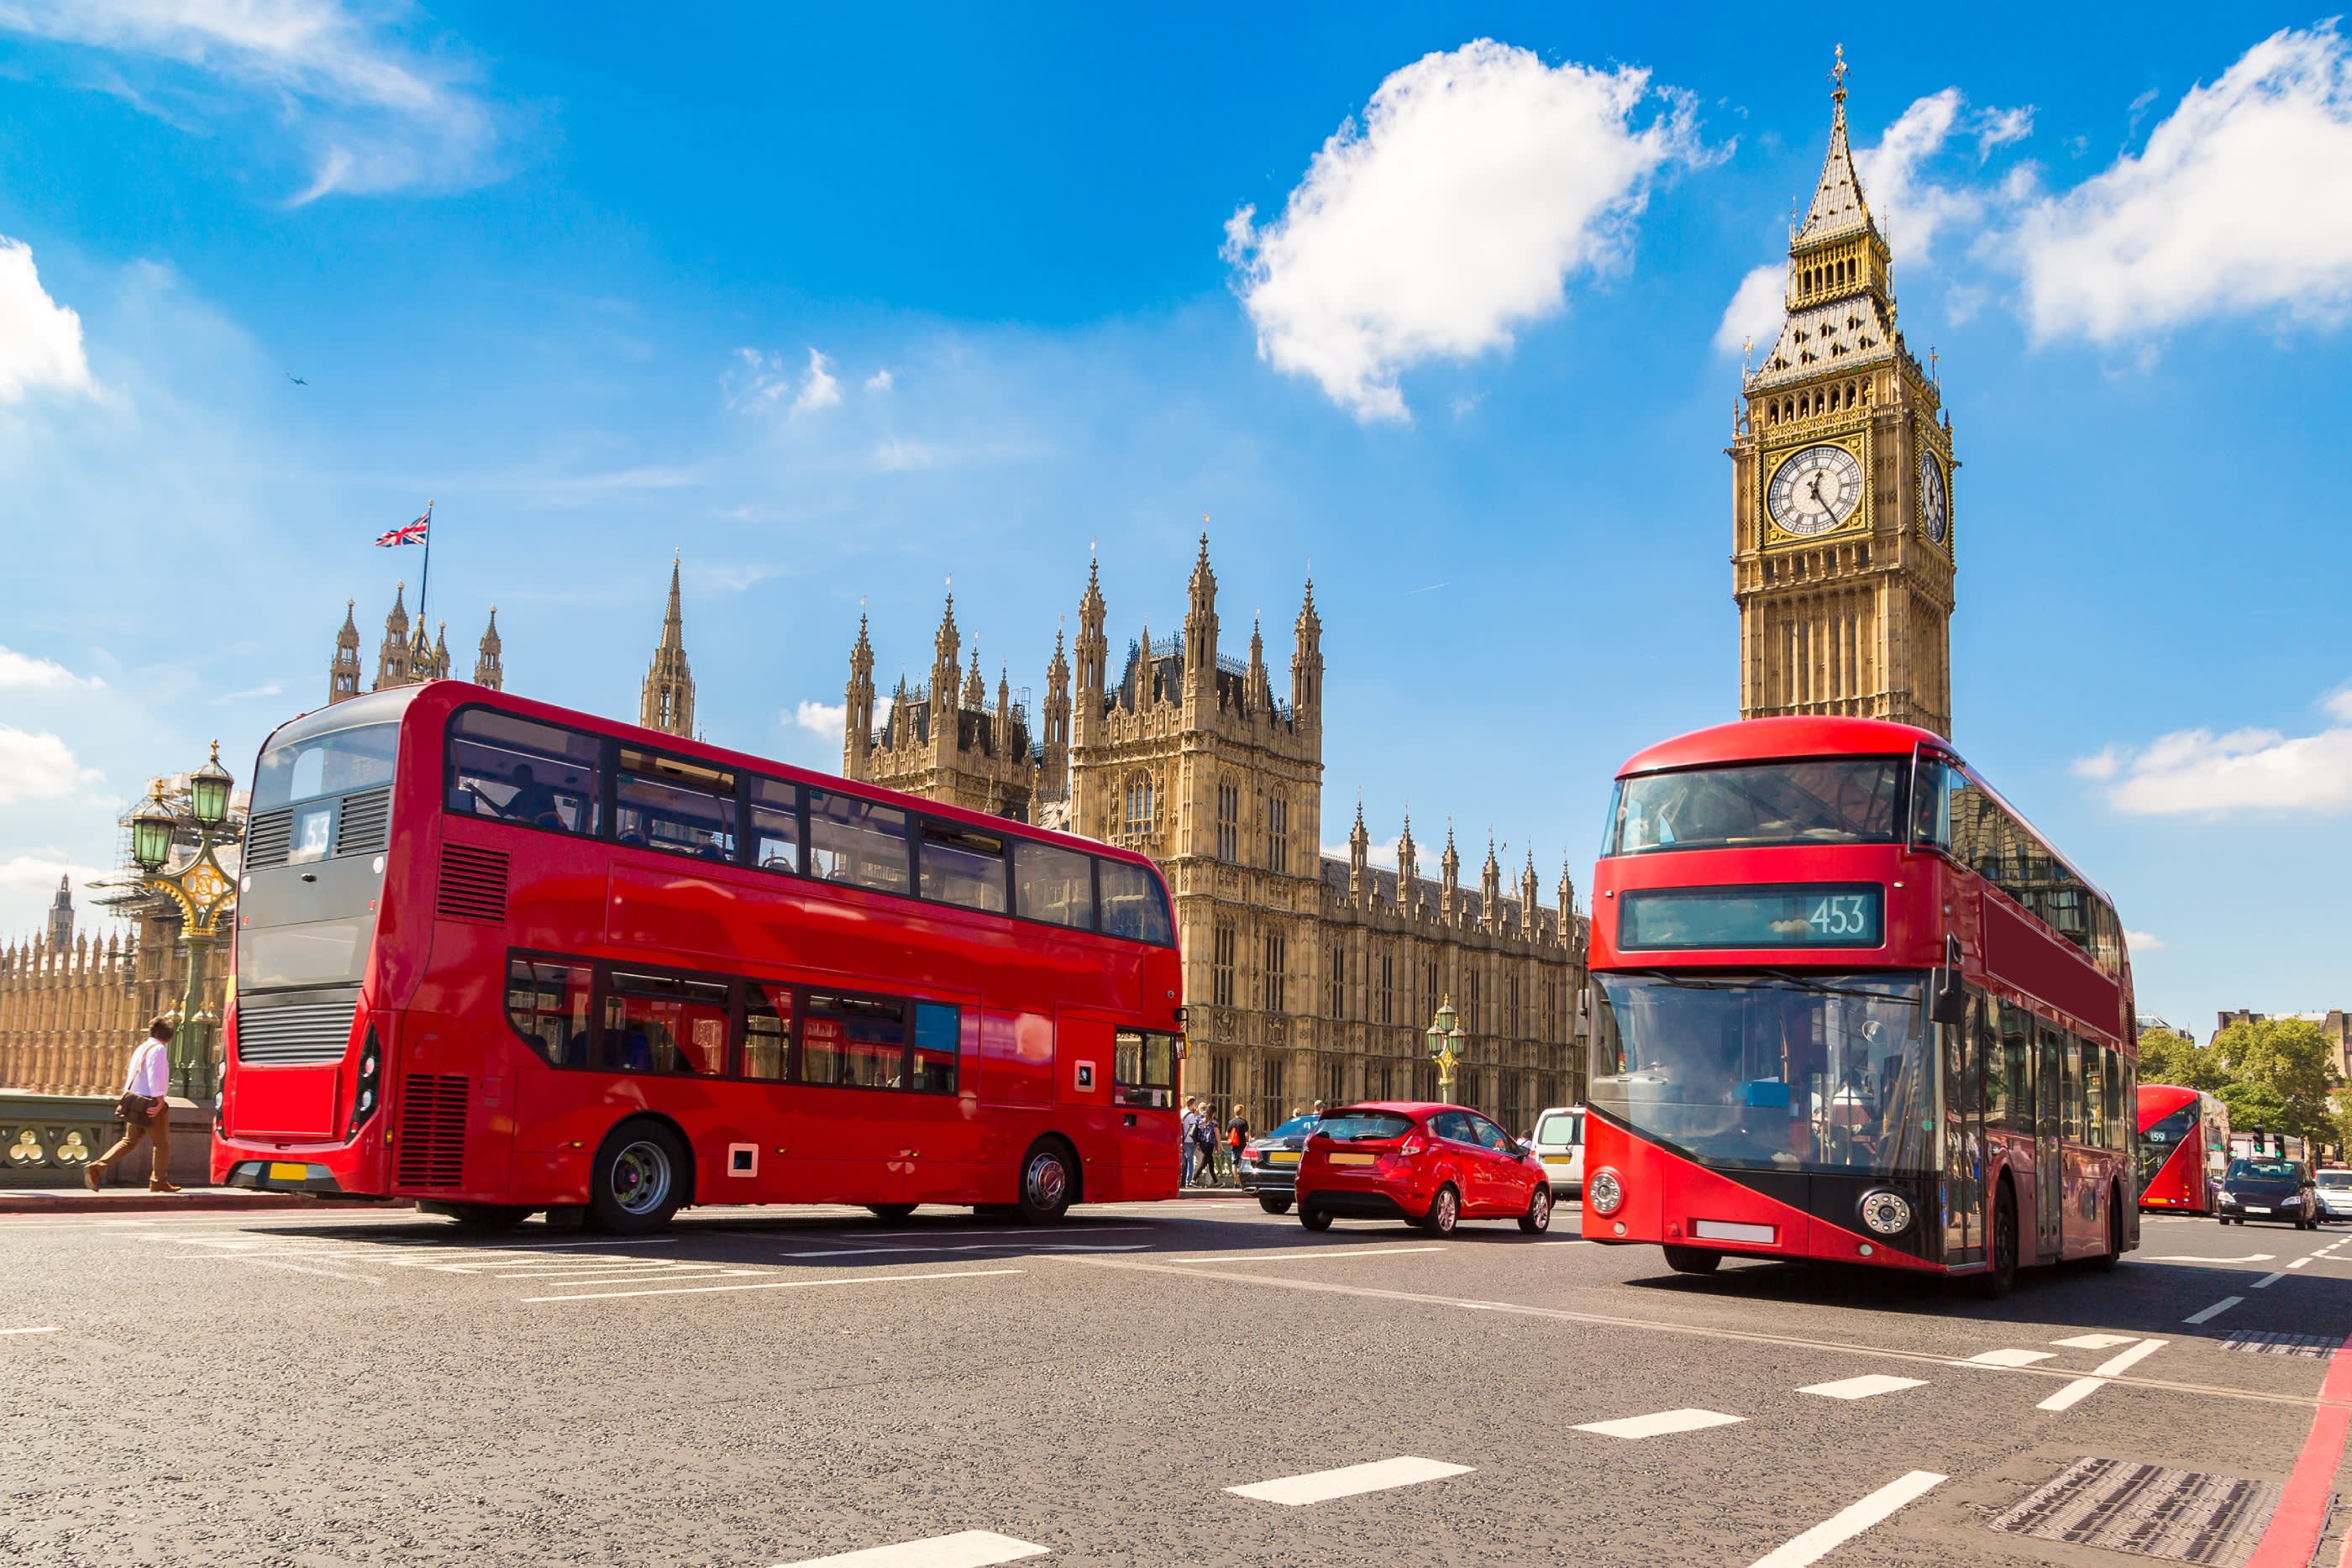 Big-Ben-Westminster-Bridge-red-double-decker-bus-London-England-United-Kingdom